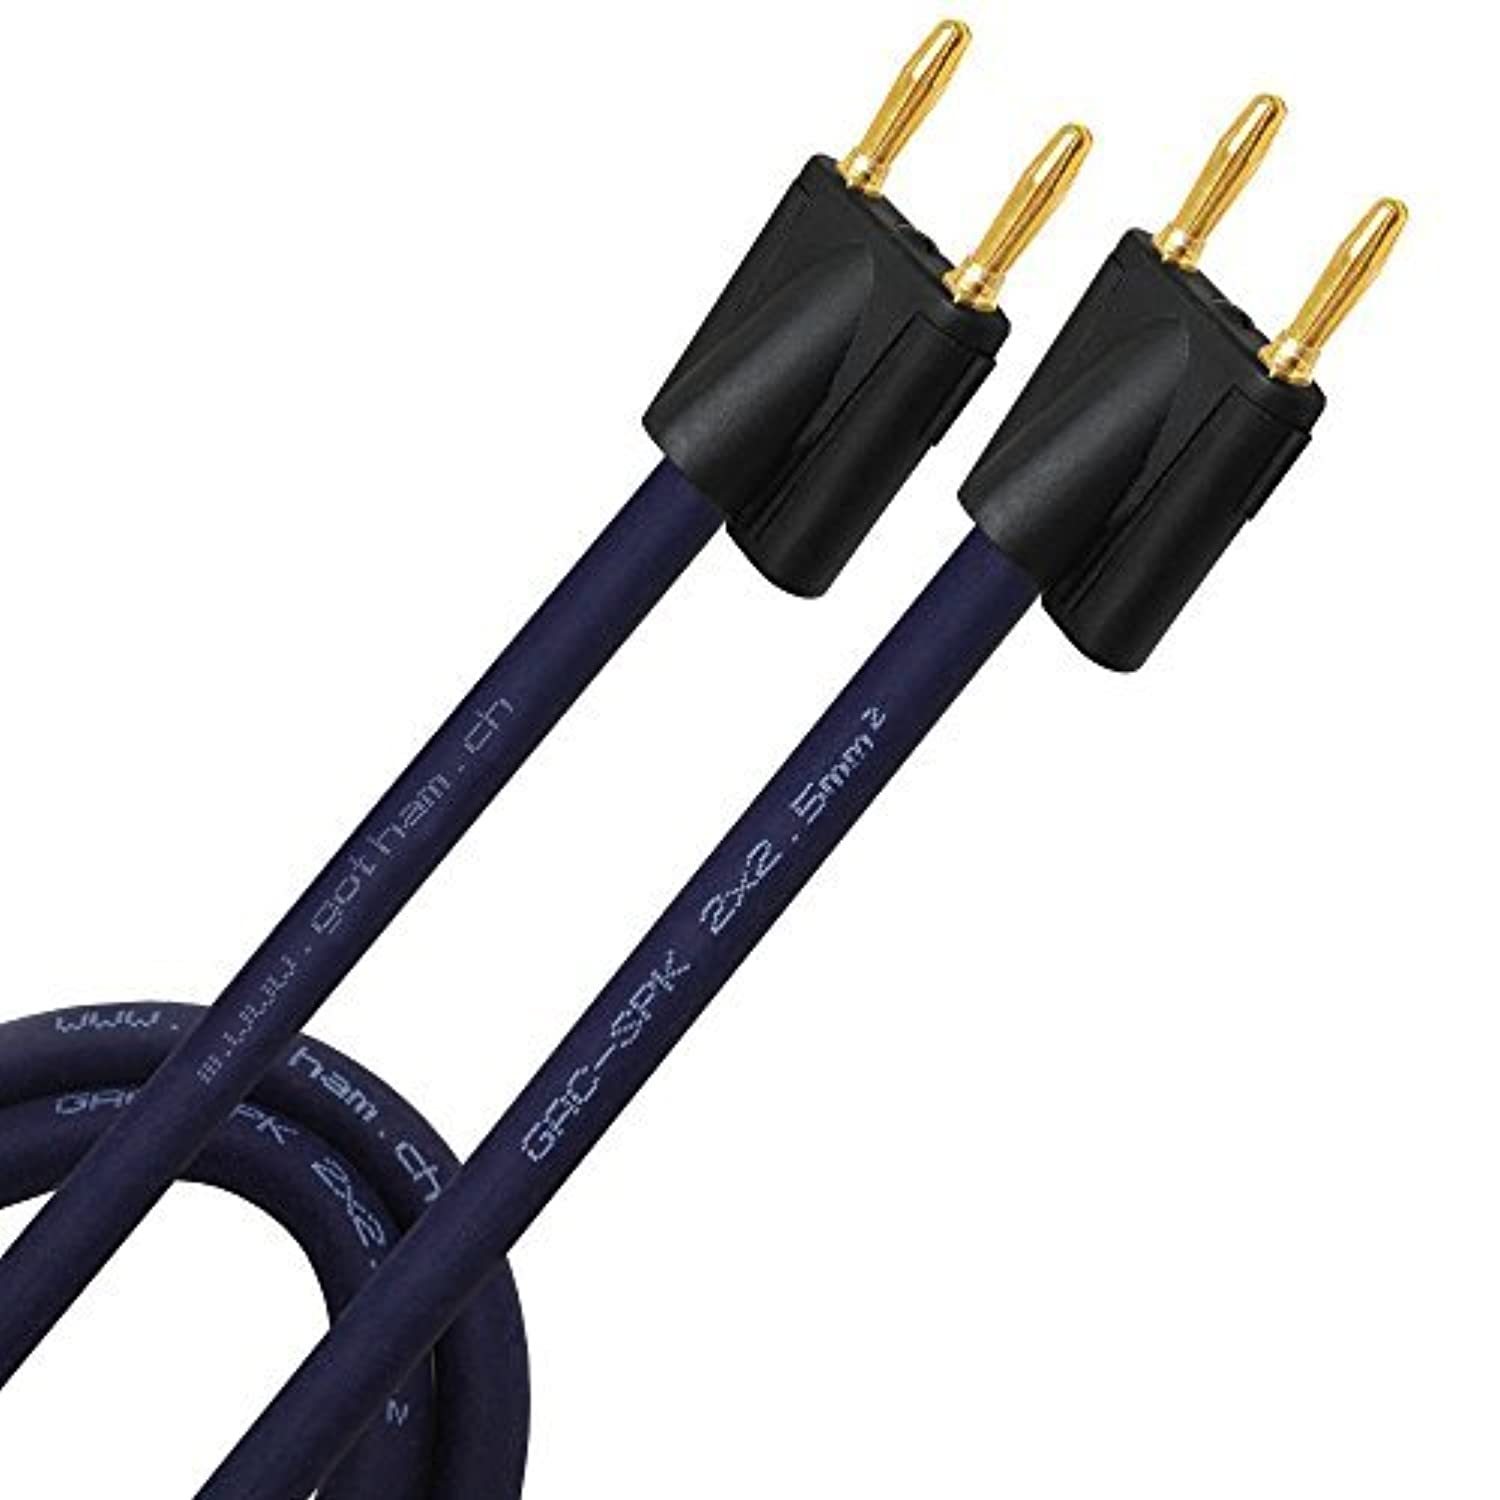 3 Foot - Gotham Gac-Spk 2 X 2.5Mm (Blue), 13 Awg (2.5 Mm) Coaxial Speaker Cable